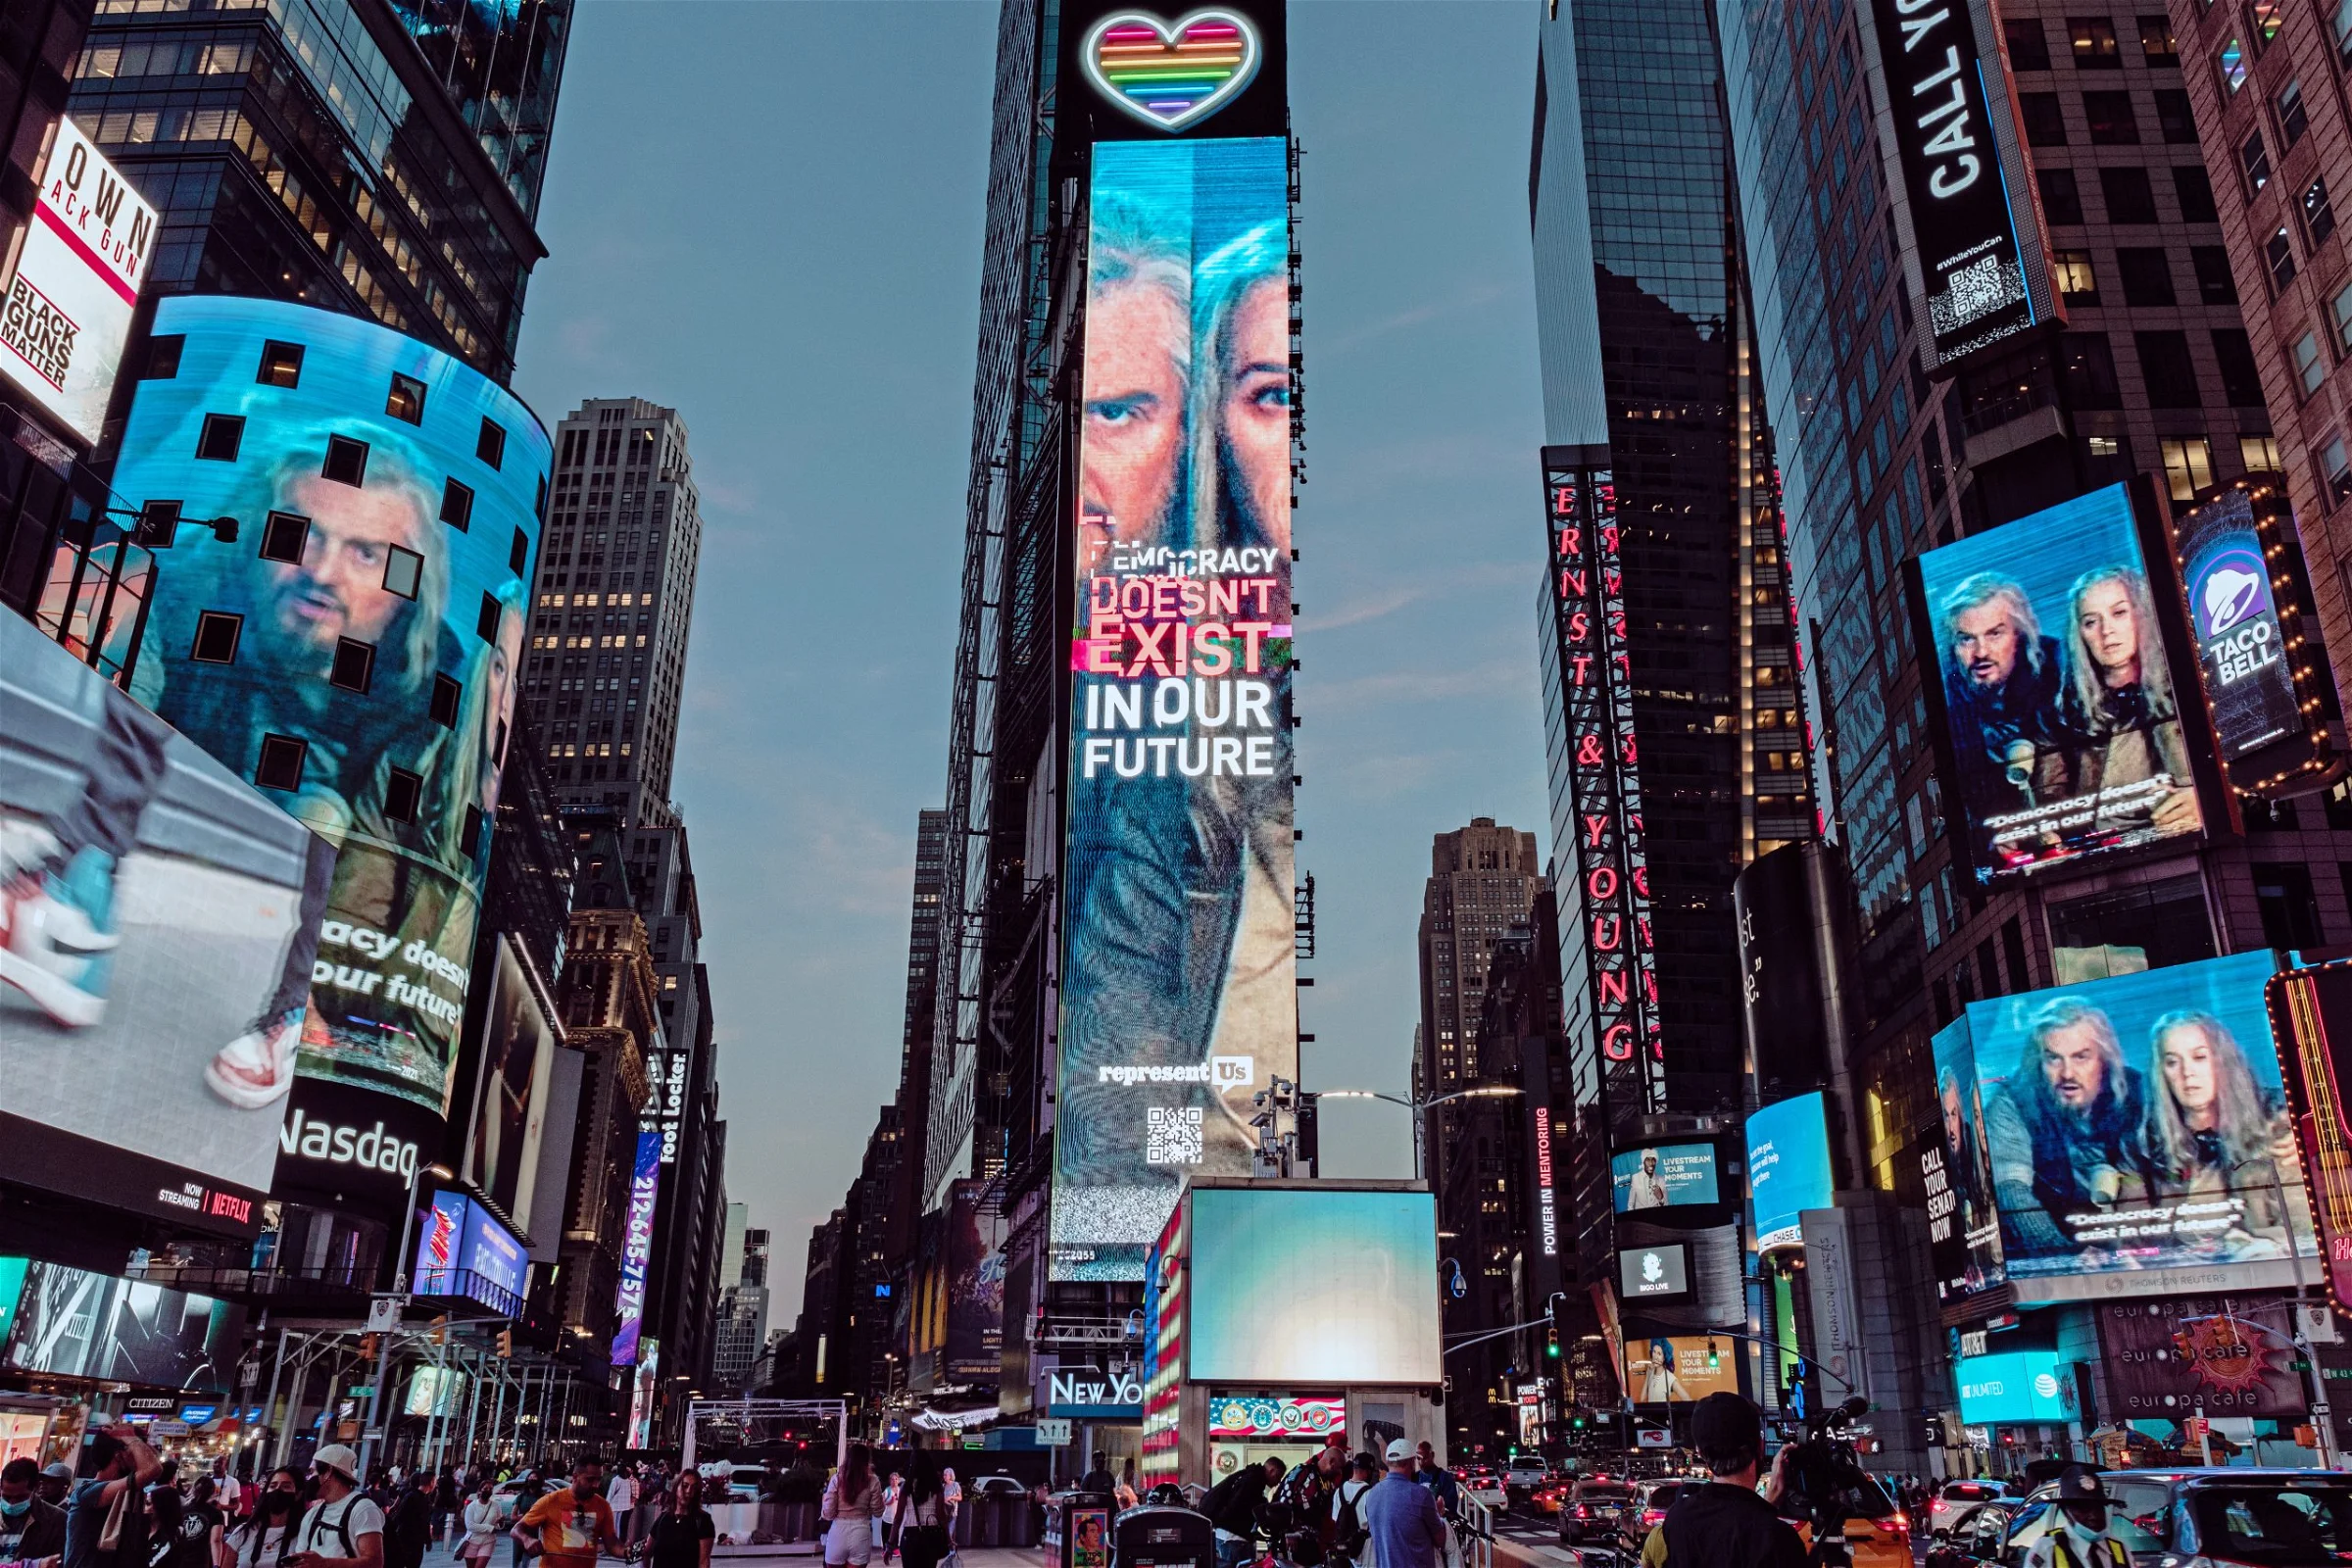 Times Square Digital Billboards